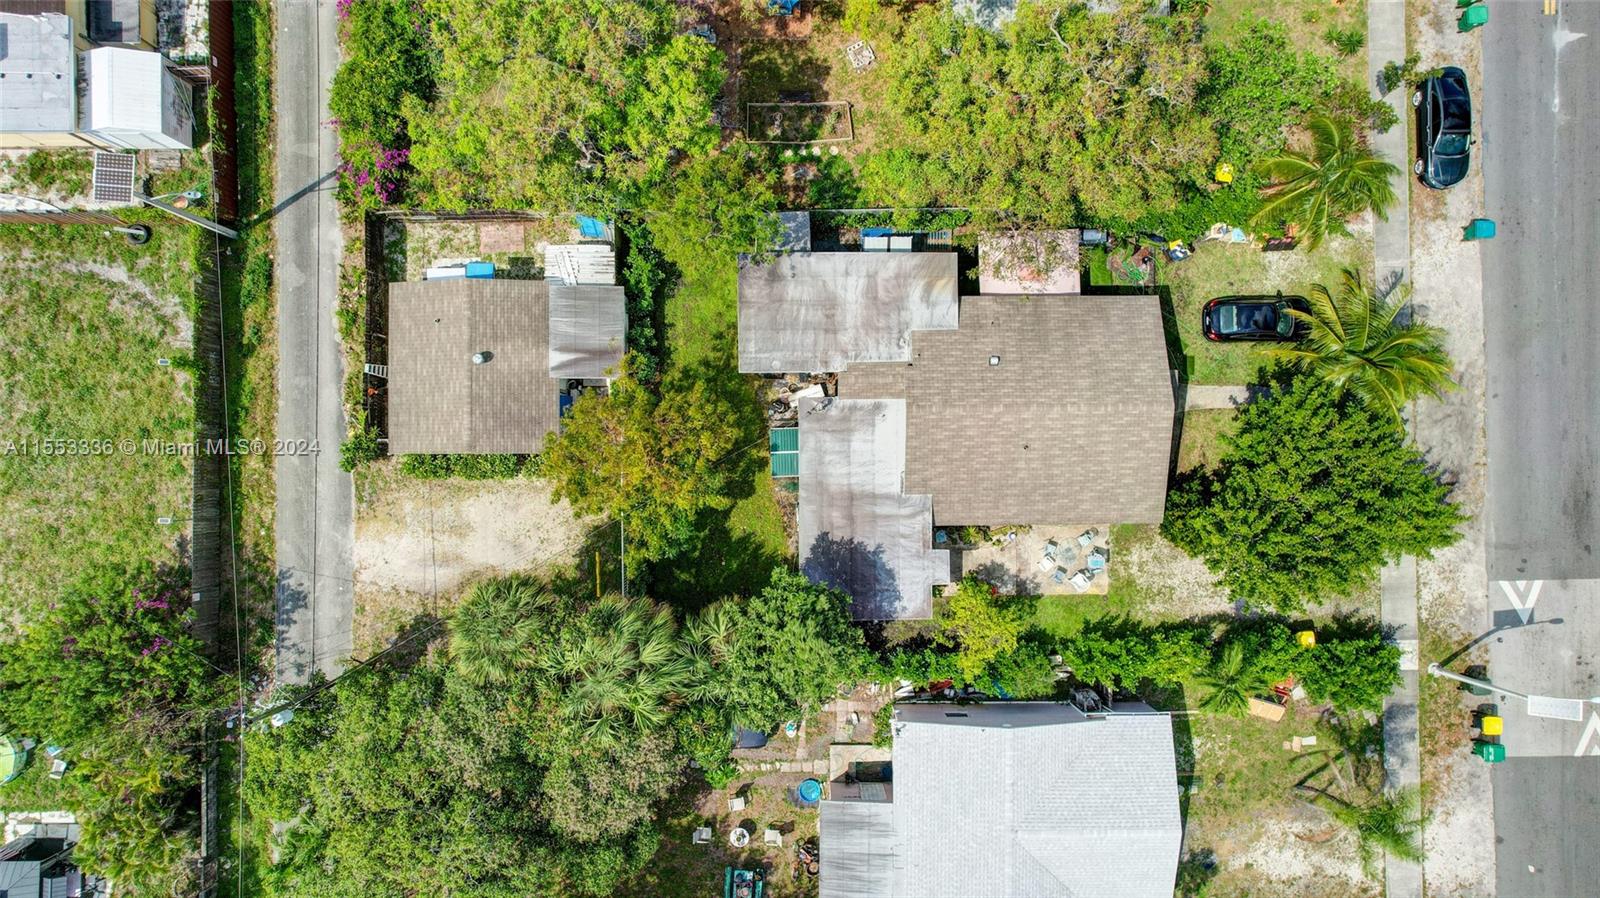 Rental Property at 49 Sw 14th St St, Dania Beach, Miami-Dade County, Florida -  - $695,000 MO.